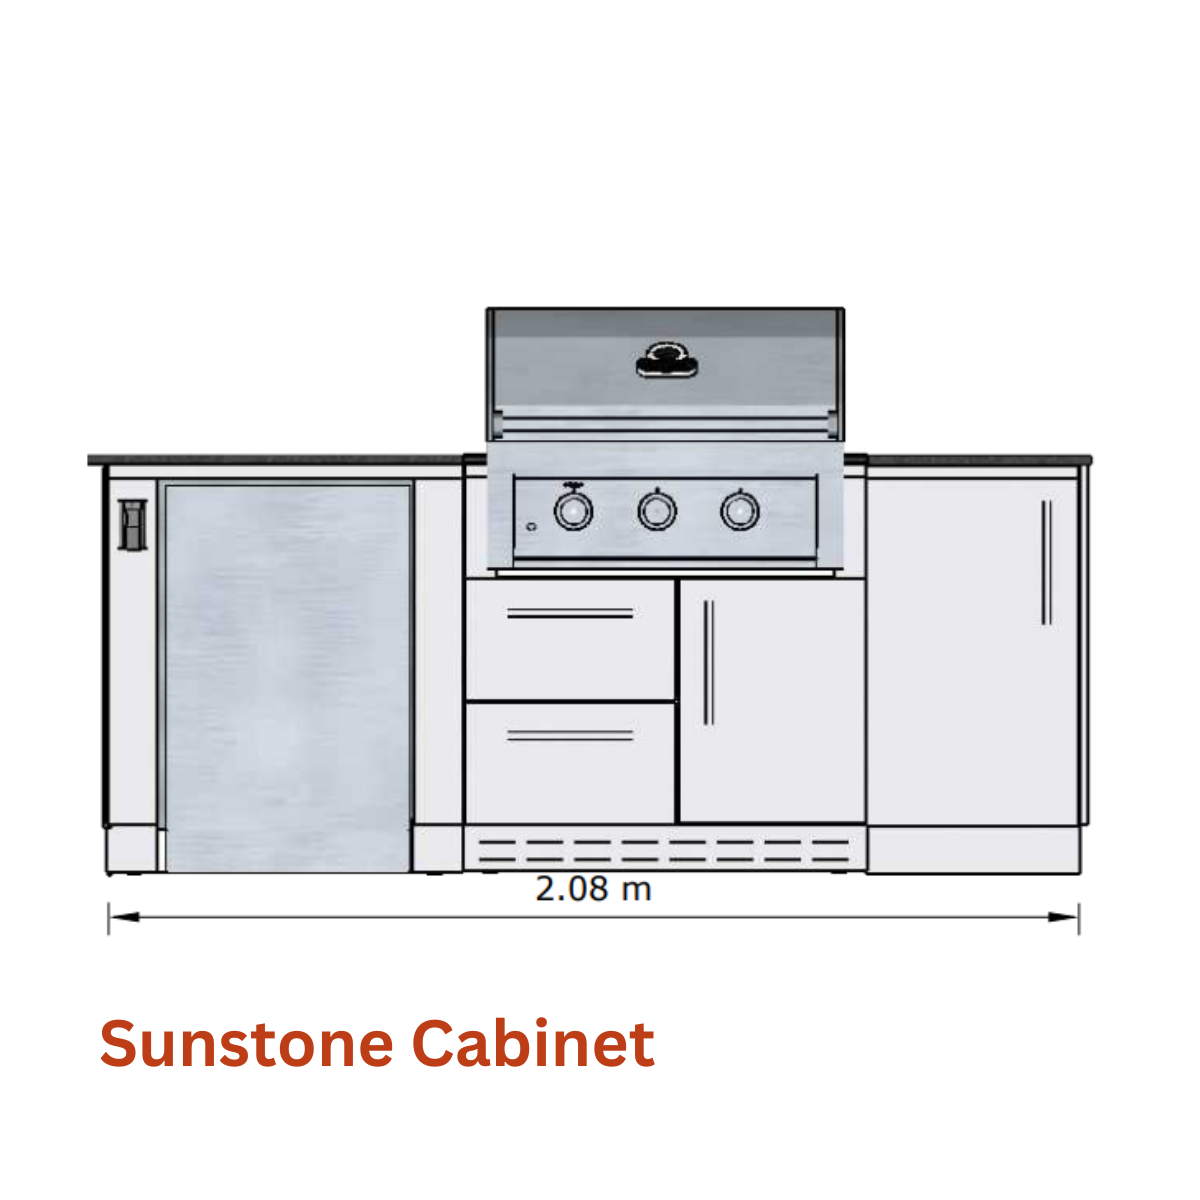 Sunstone Cabinet